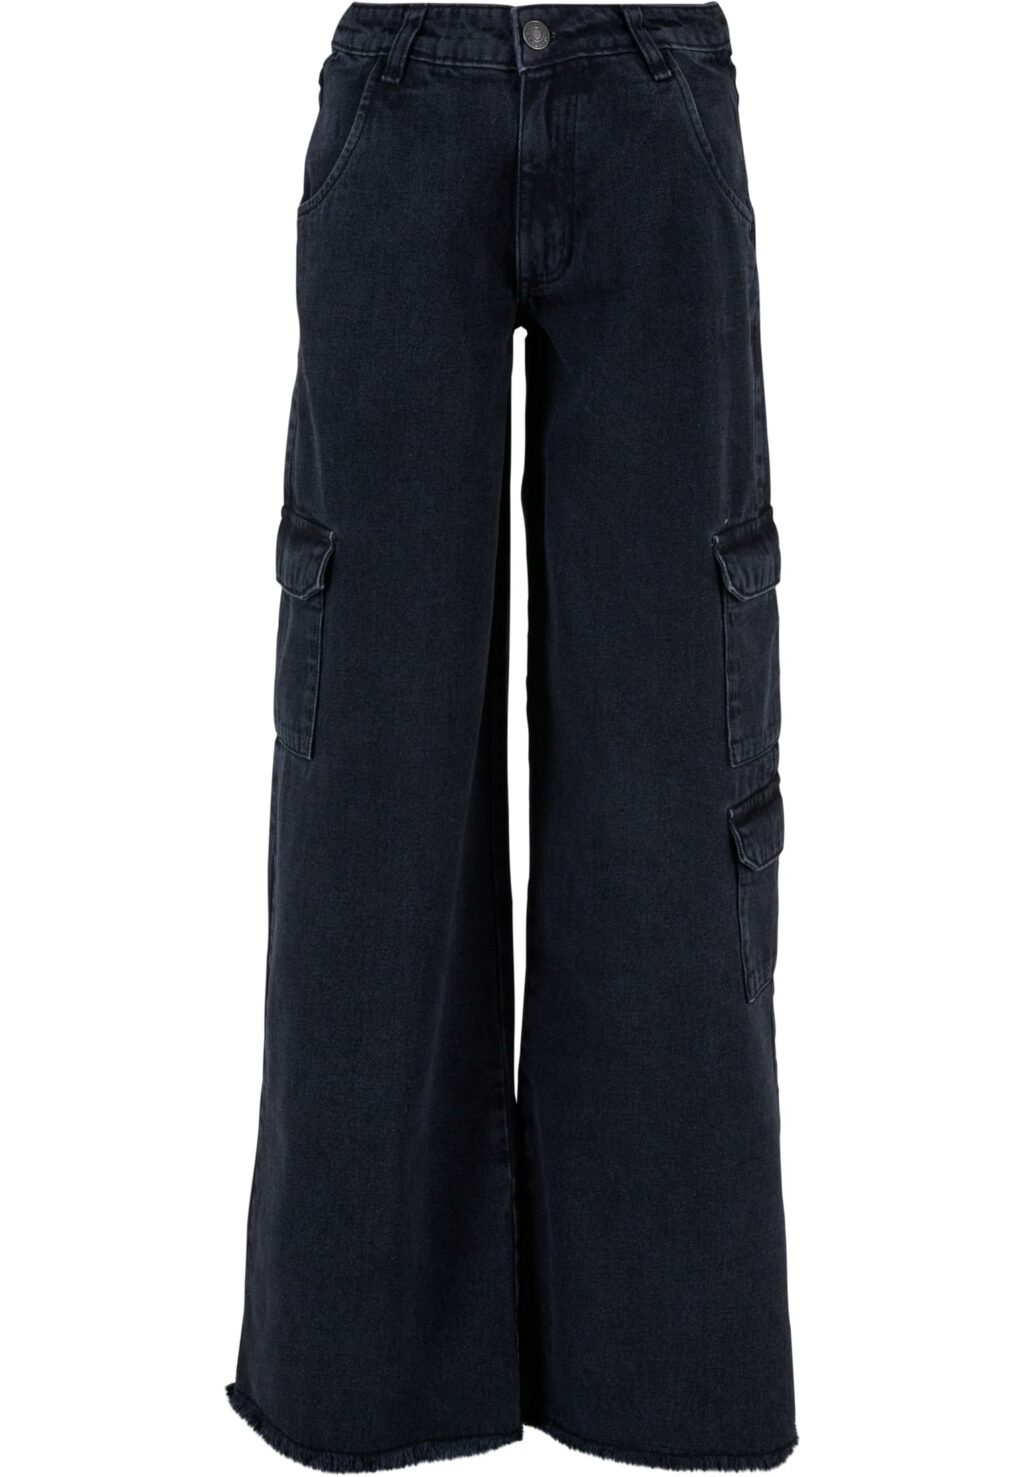 Urban Classics Ladies Mid Waist Cargo Denim Pants black charcoal washed TB6156